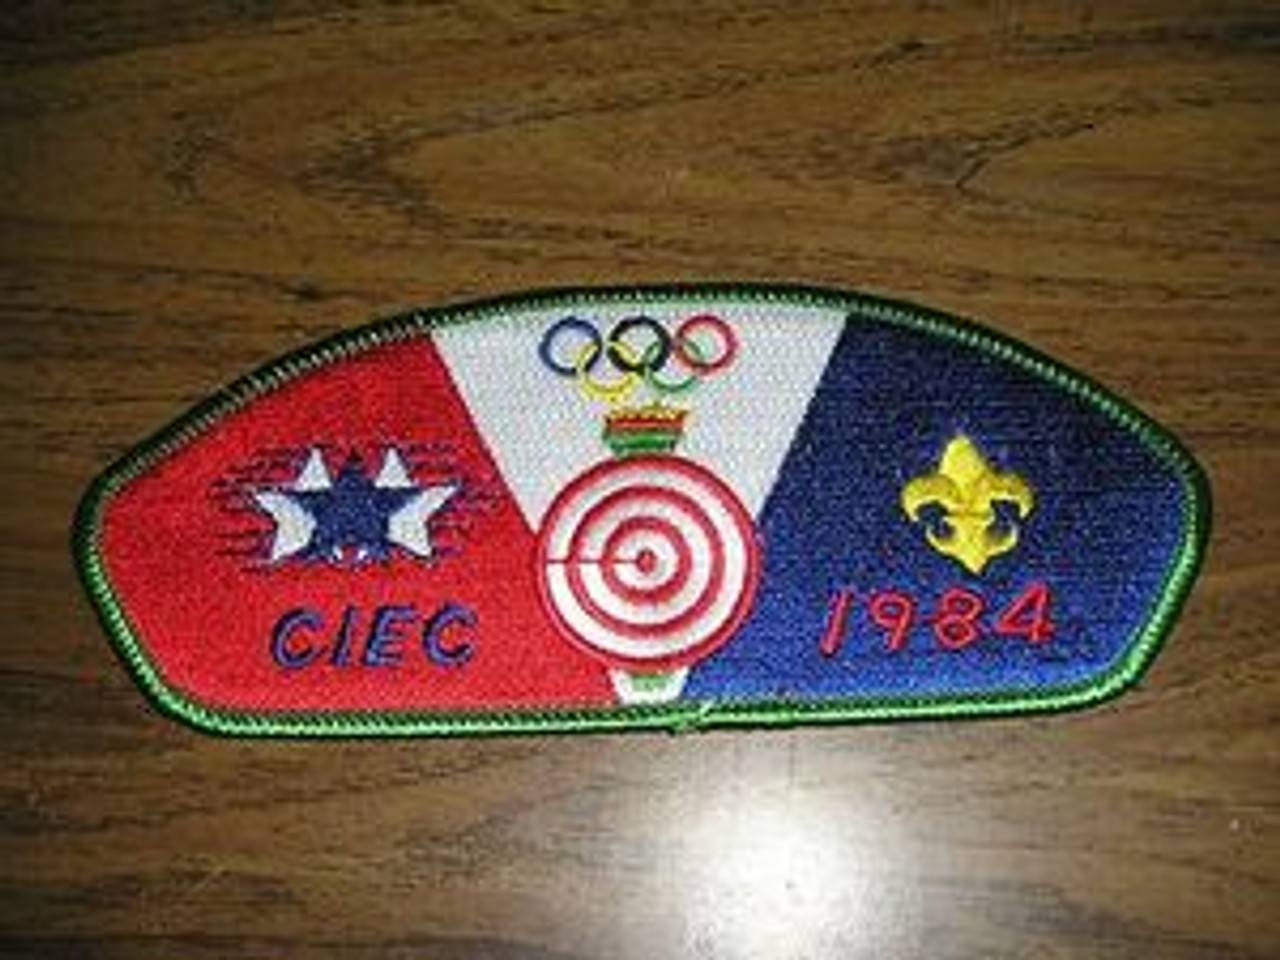 California Inland Empire Council sa14 CSP - 1984 Olympics